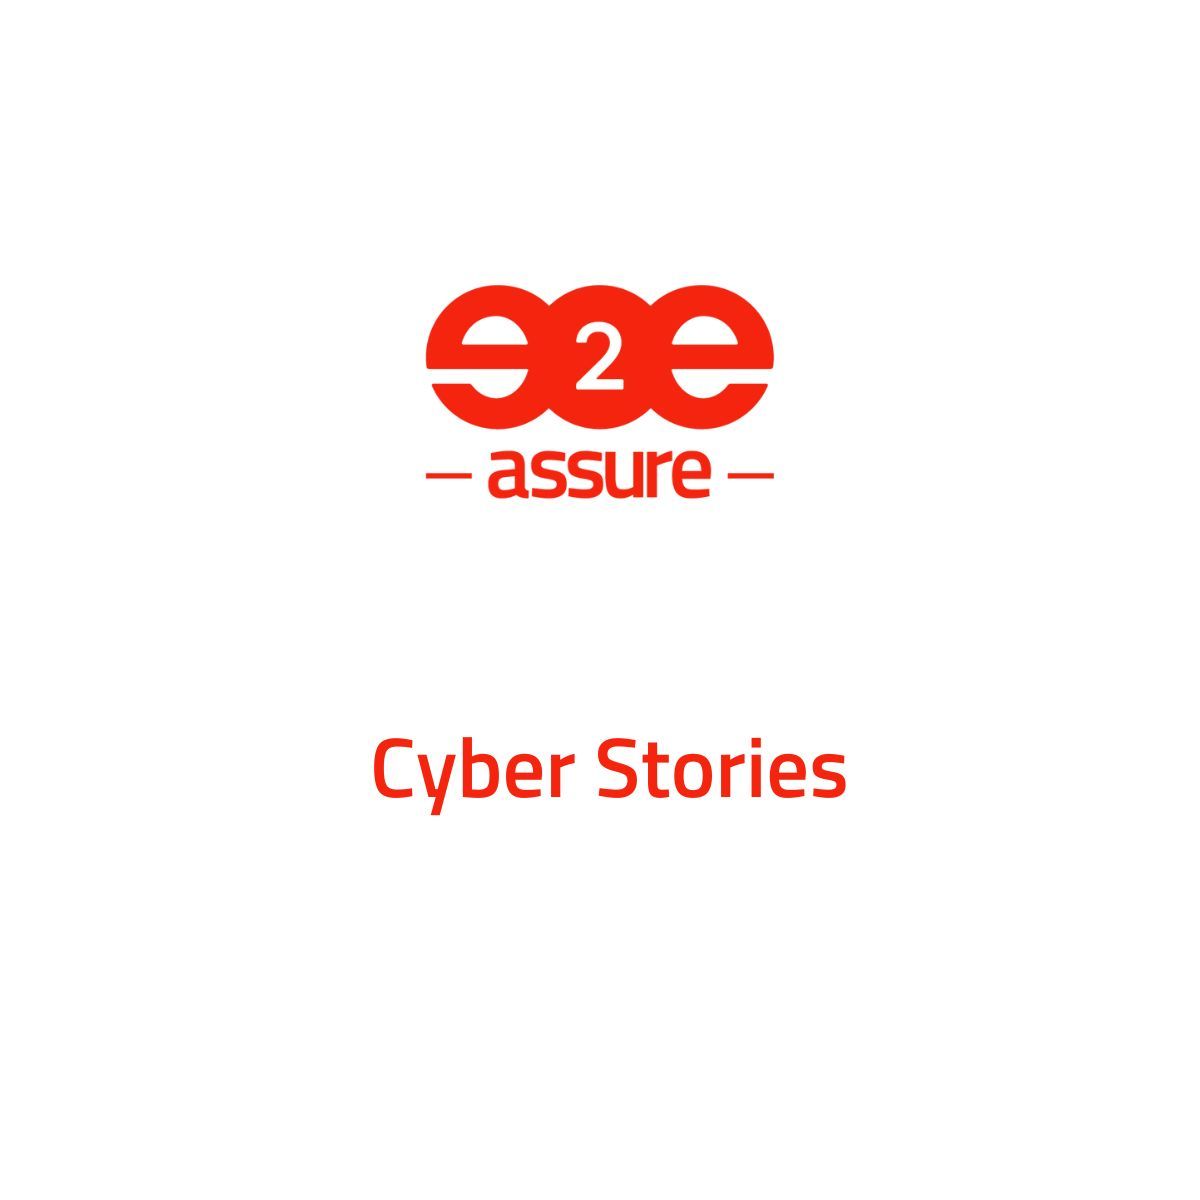 e2e-assure Cyber Stories: The King's New SOC